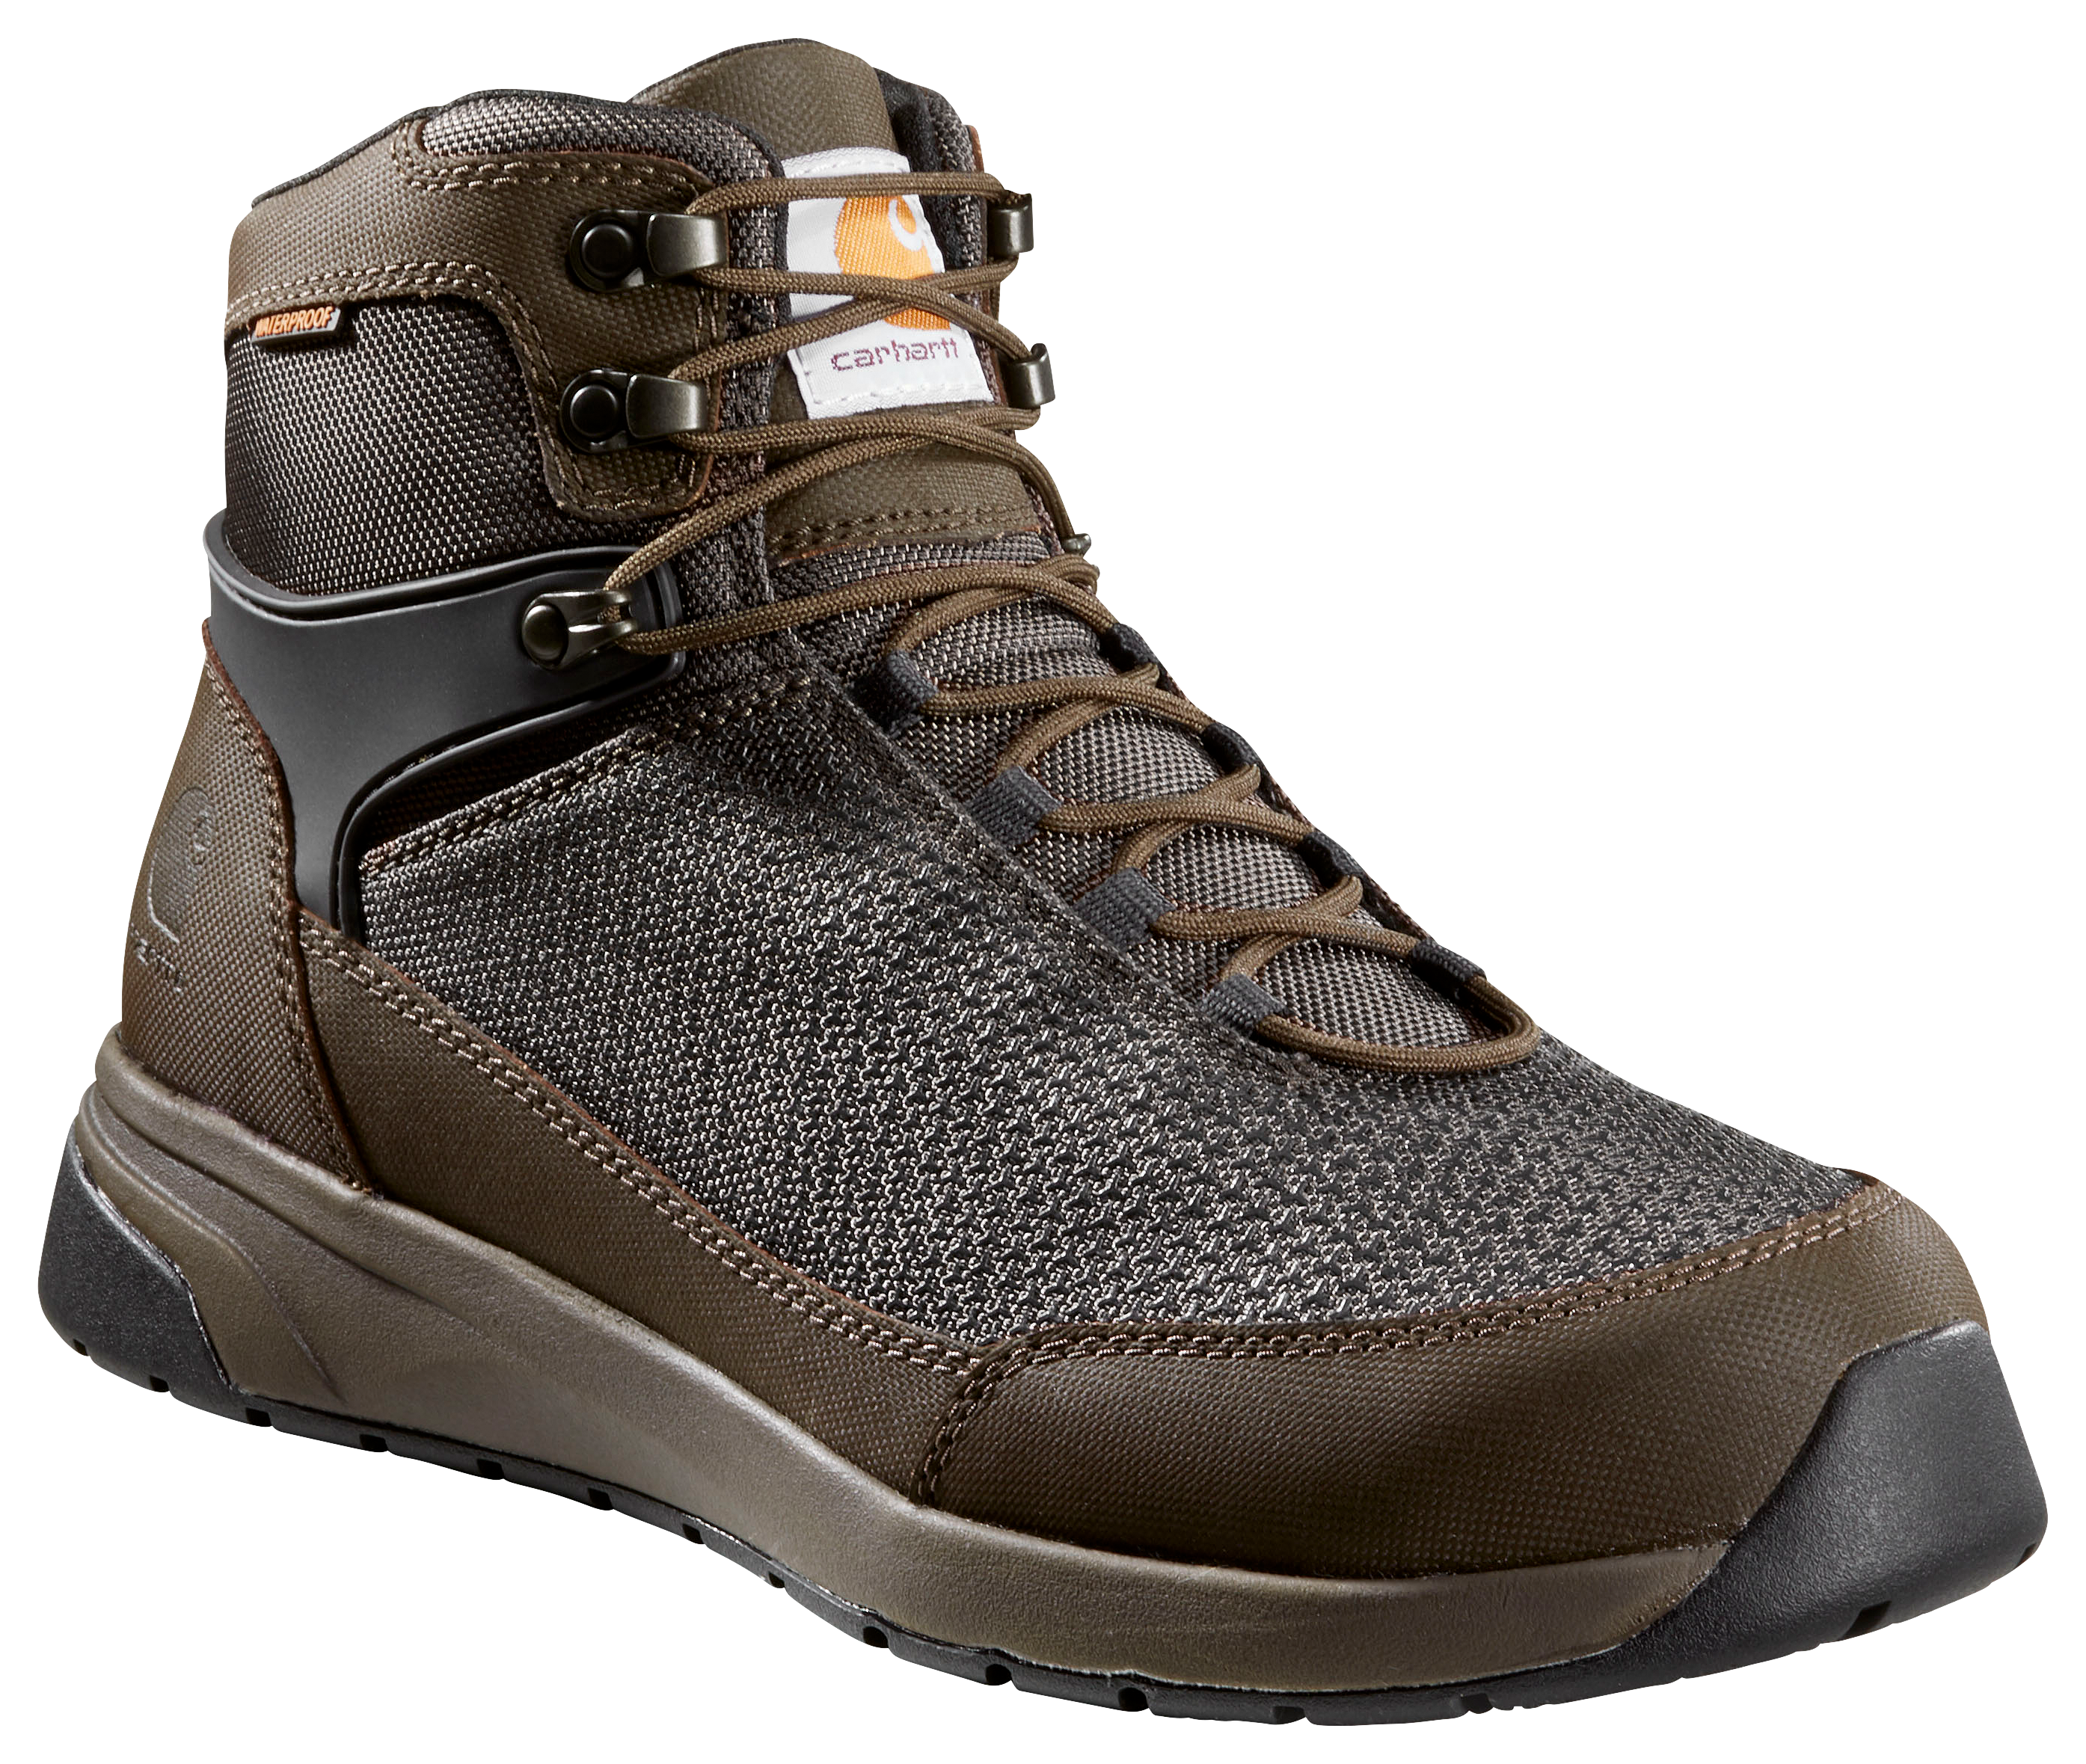 Carhartt Force 6"" Nano Composite-Toe Work Boots for Men - Espresso - 14W